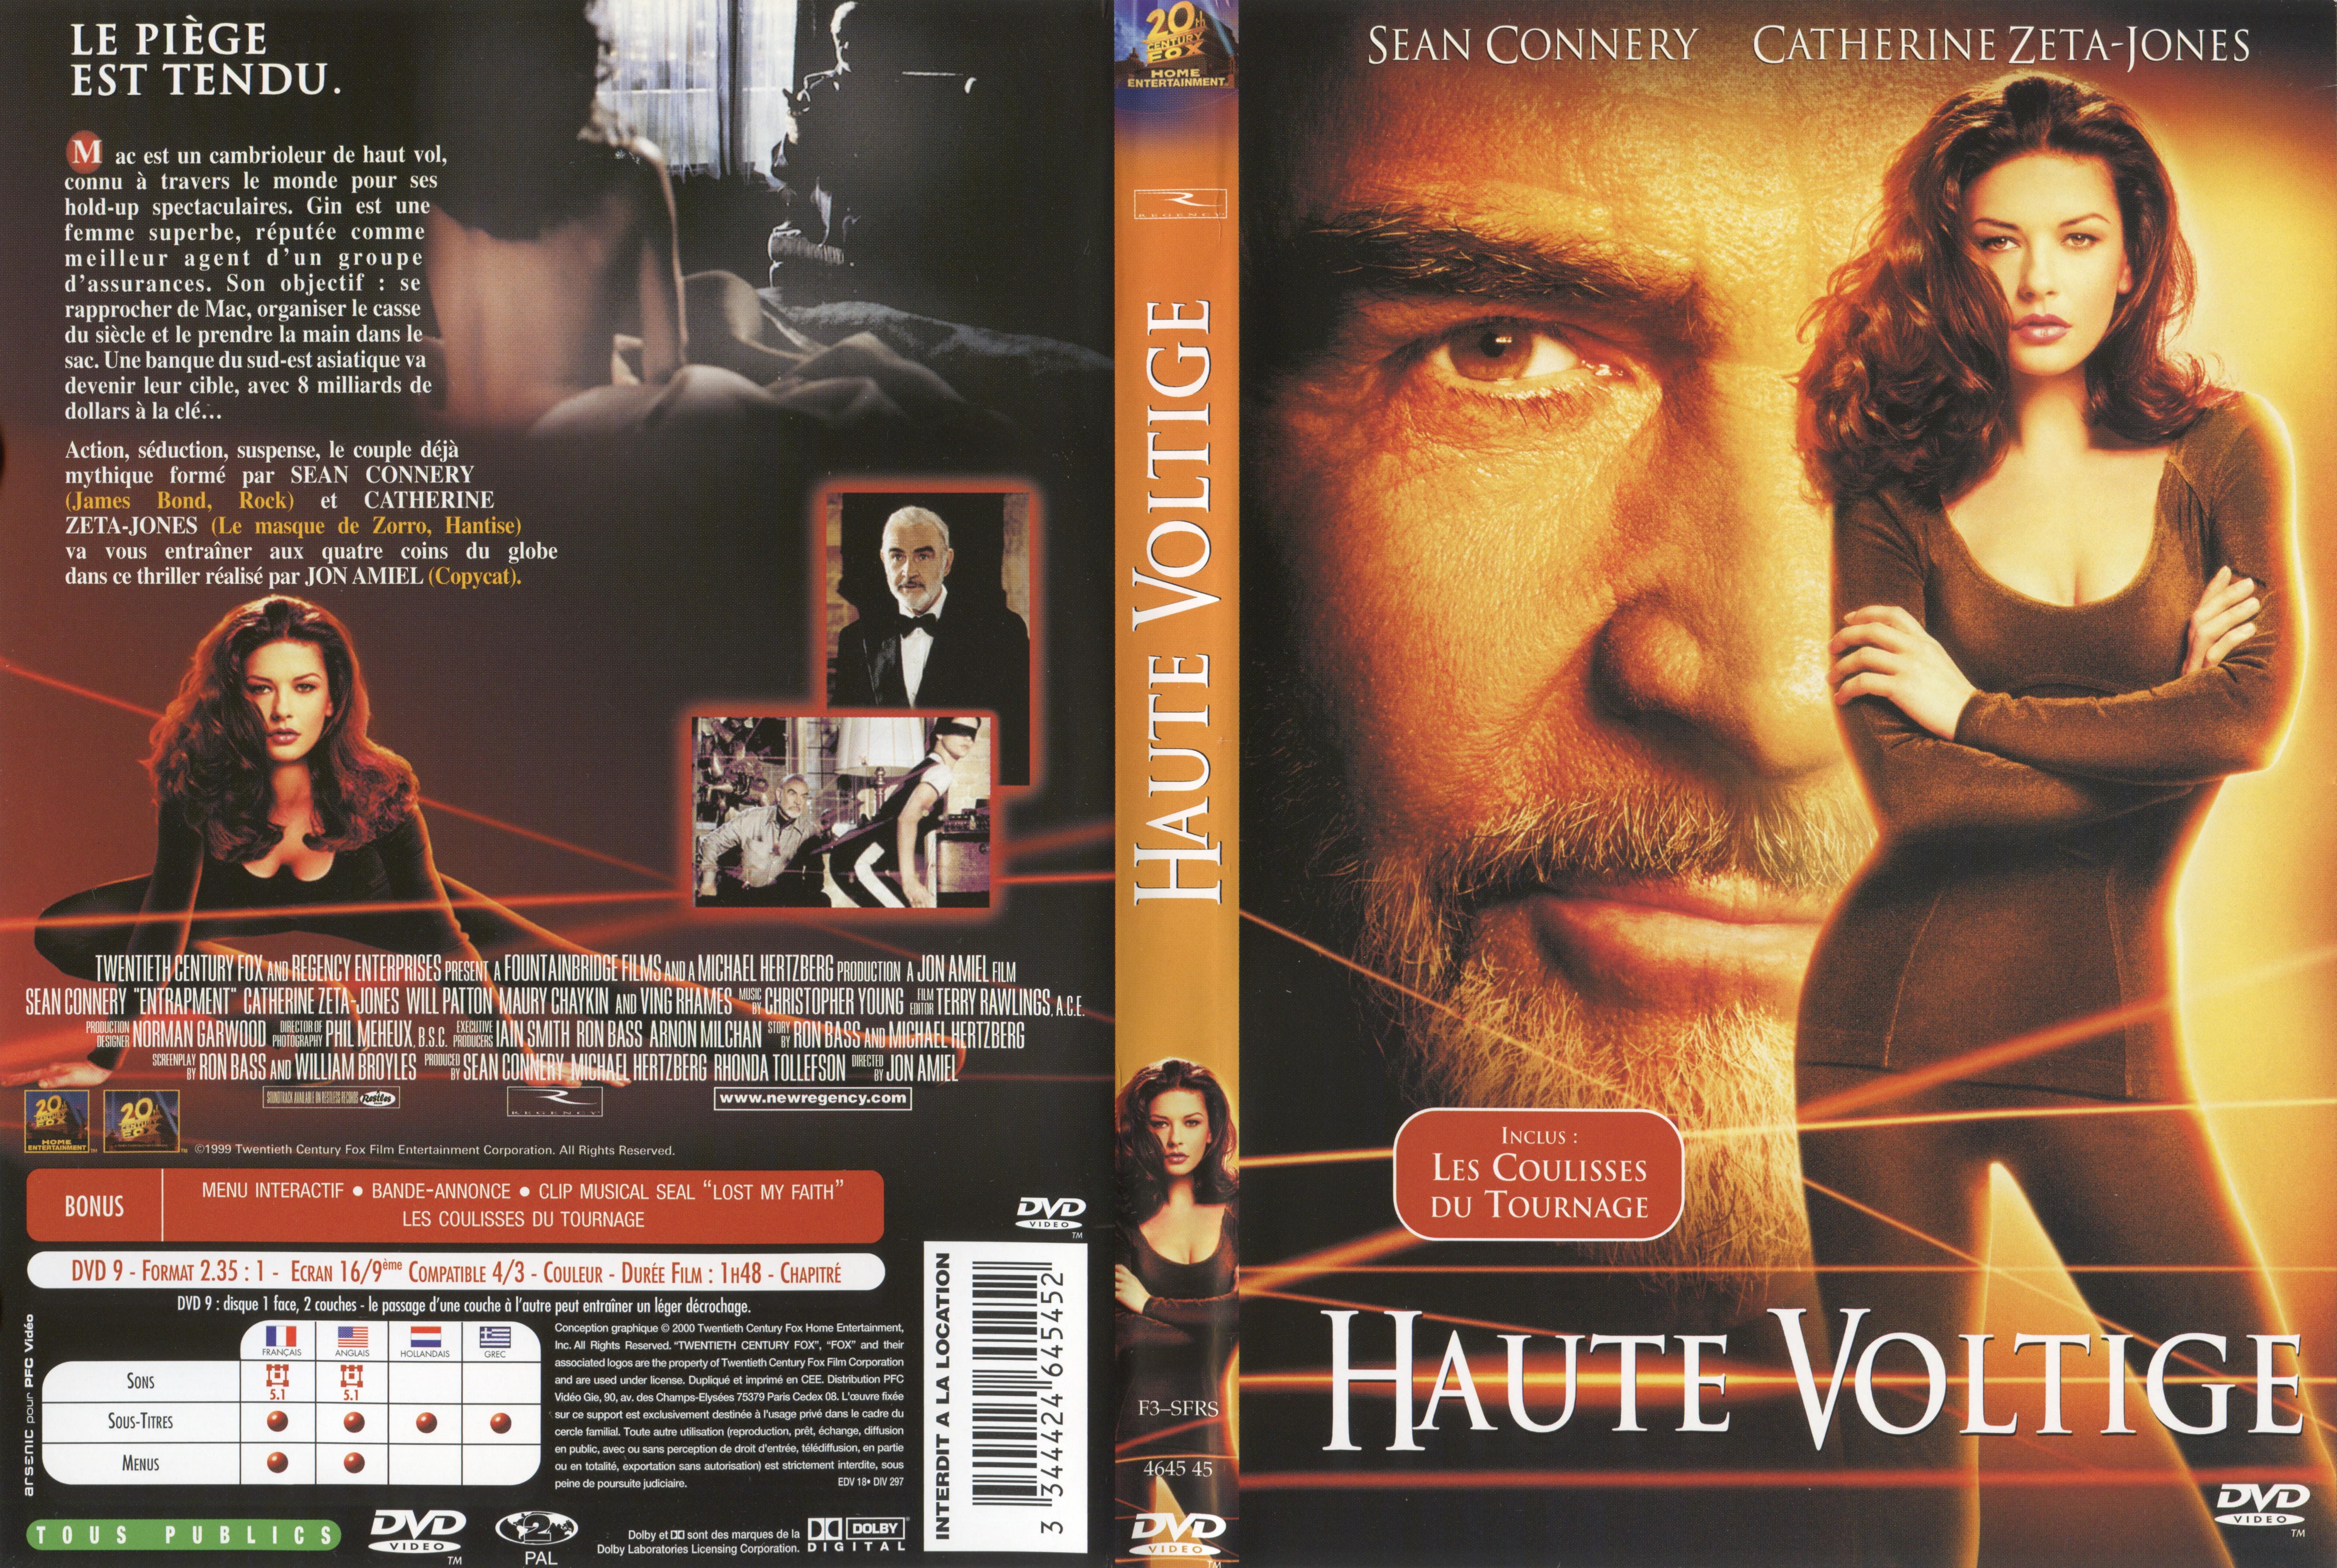 Jaquette DVD Haute voltige v3